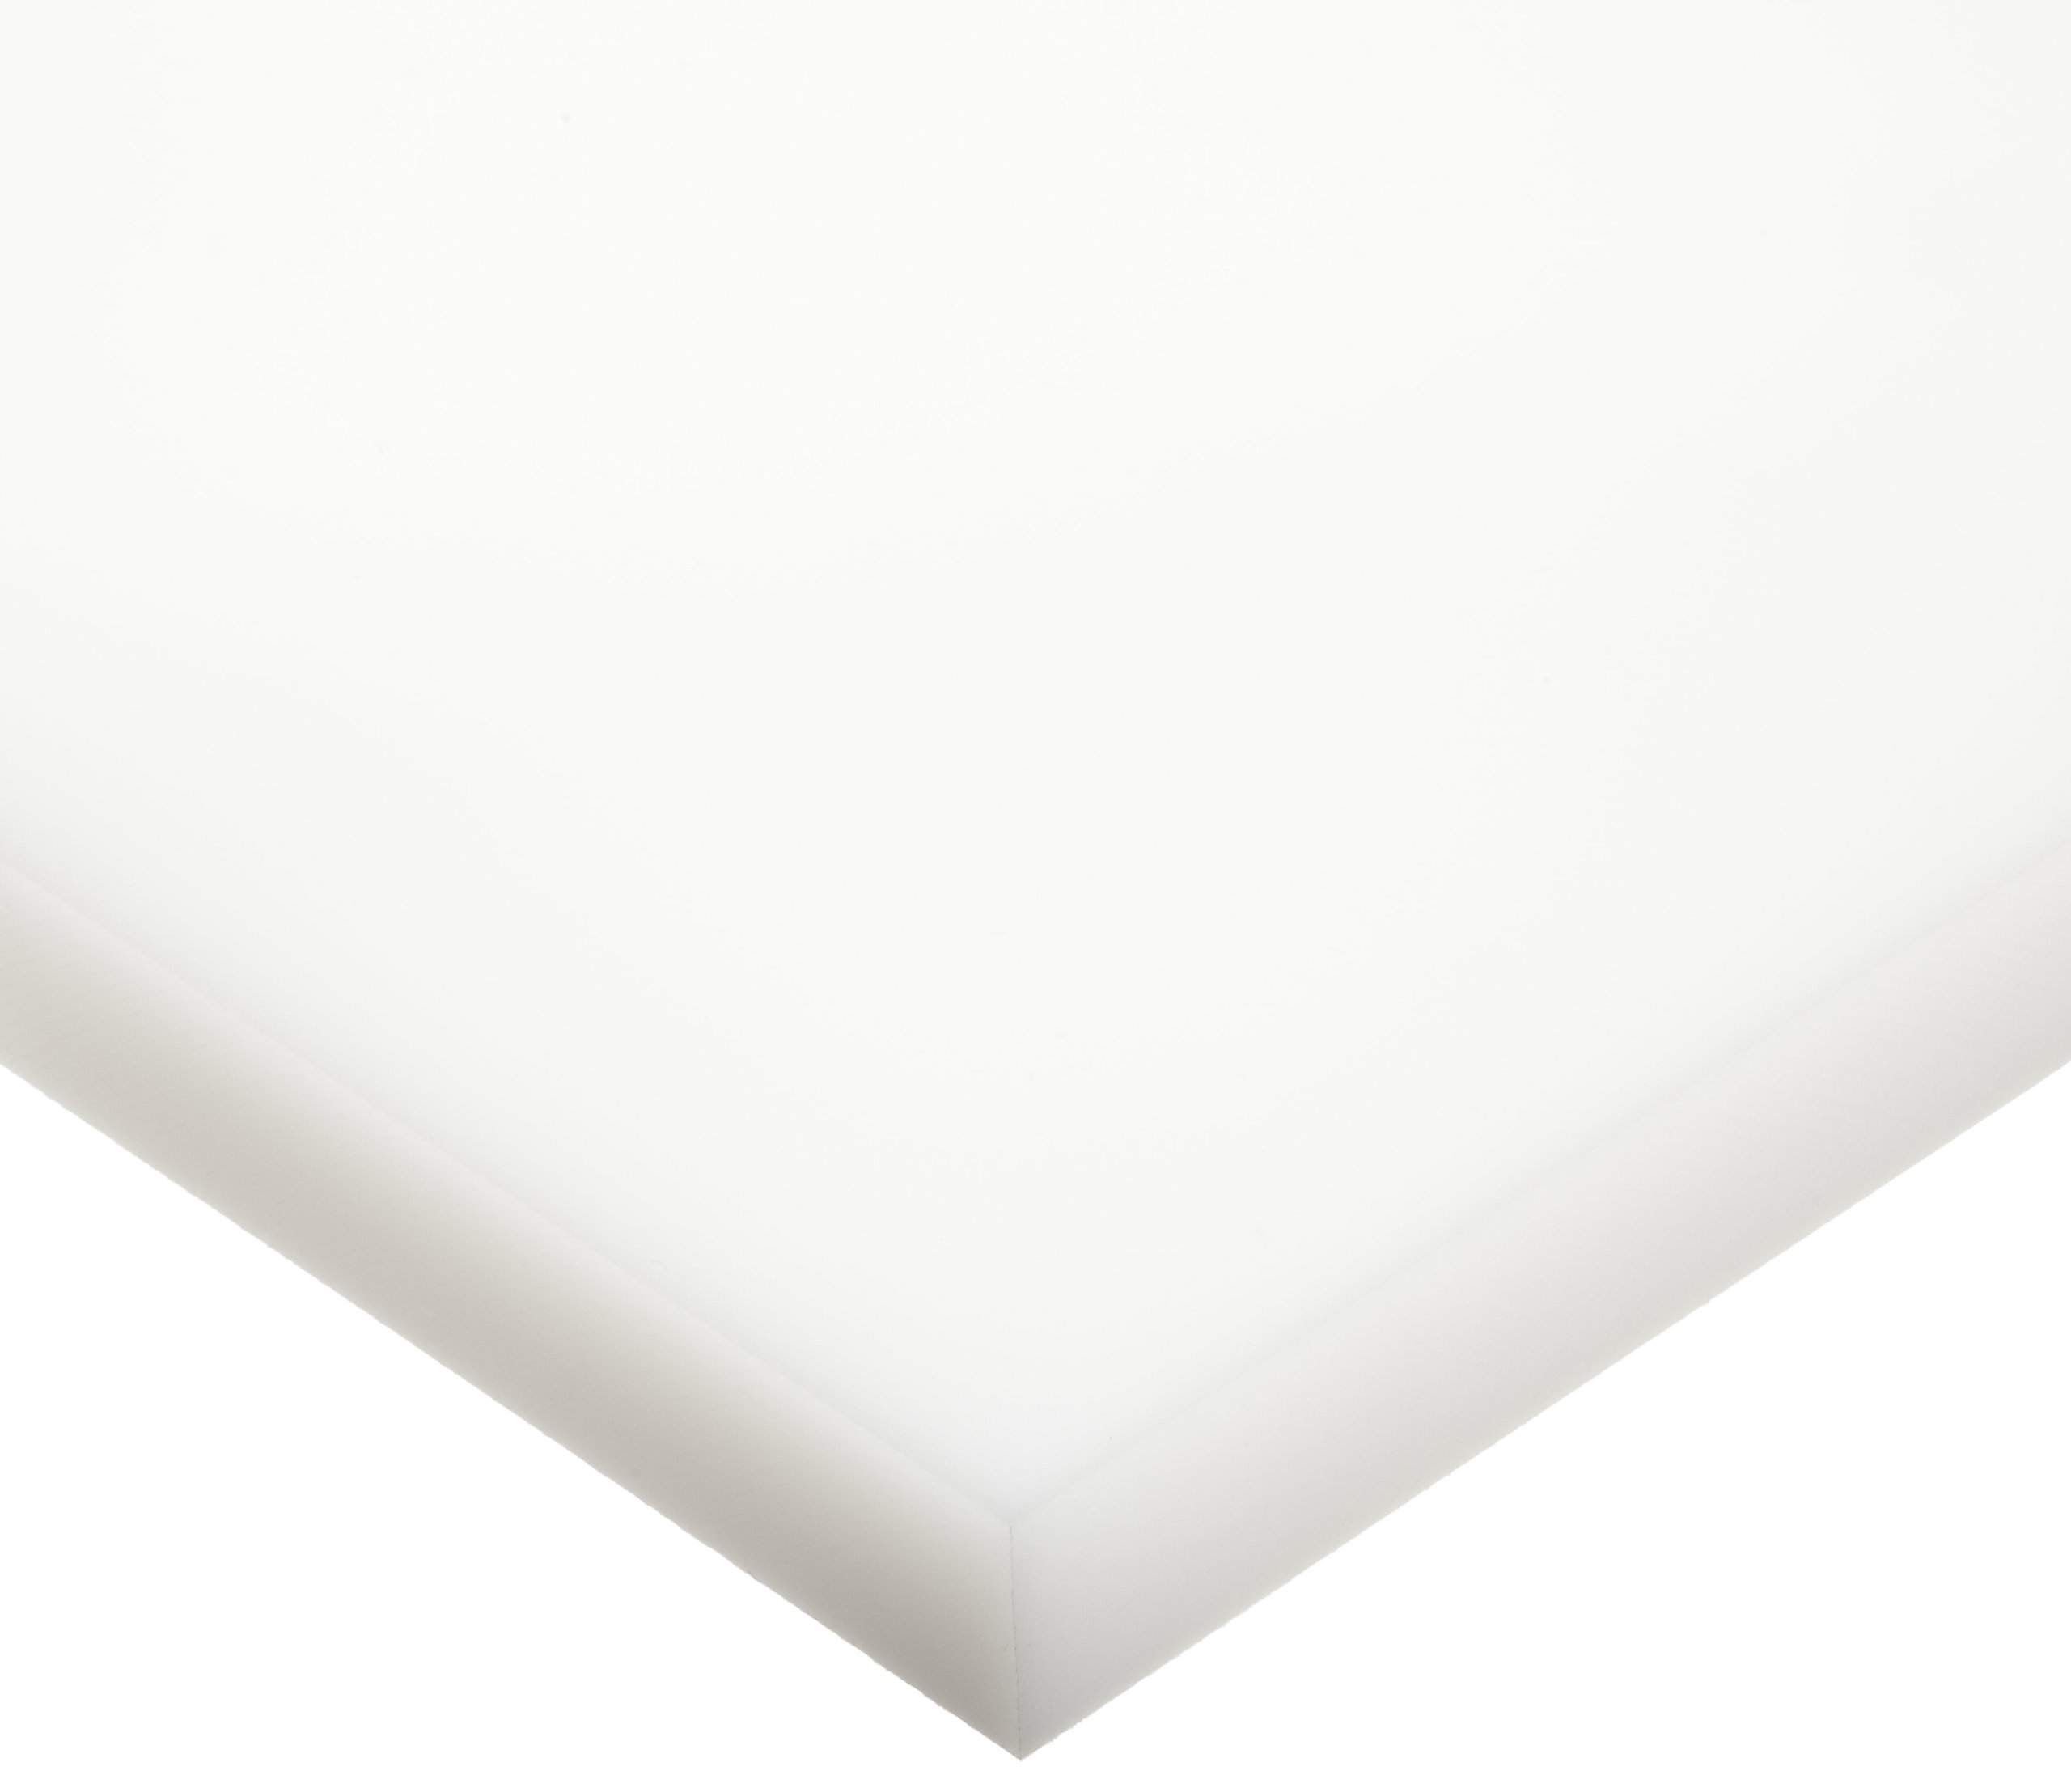 Thick x 24" x 24" Tivar UHMW PE Natural White Sheet .625" 5/8" 